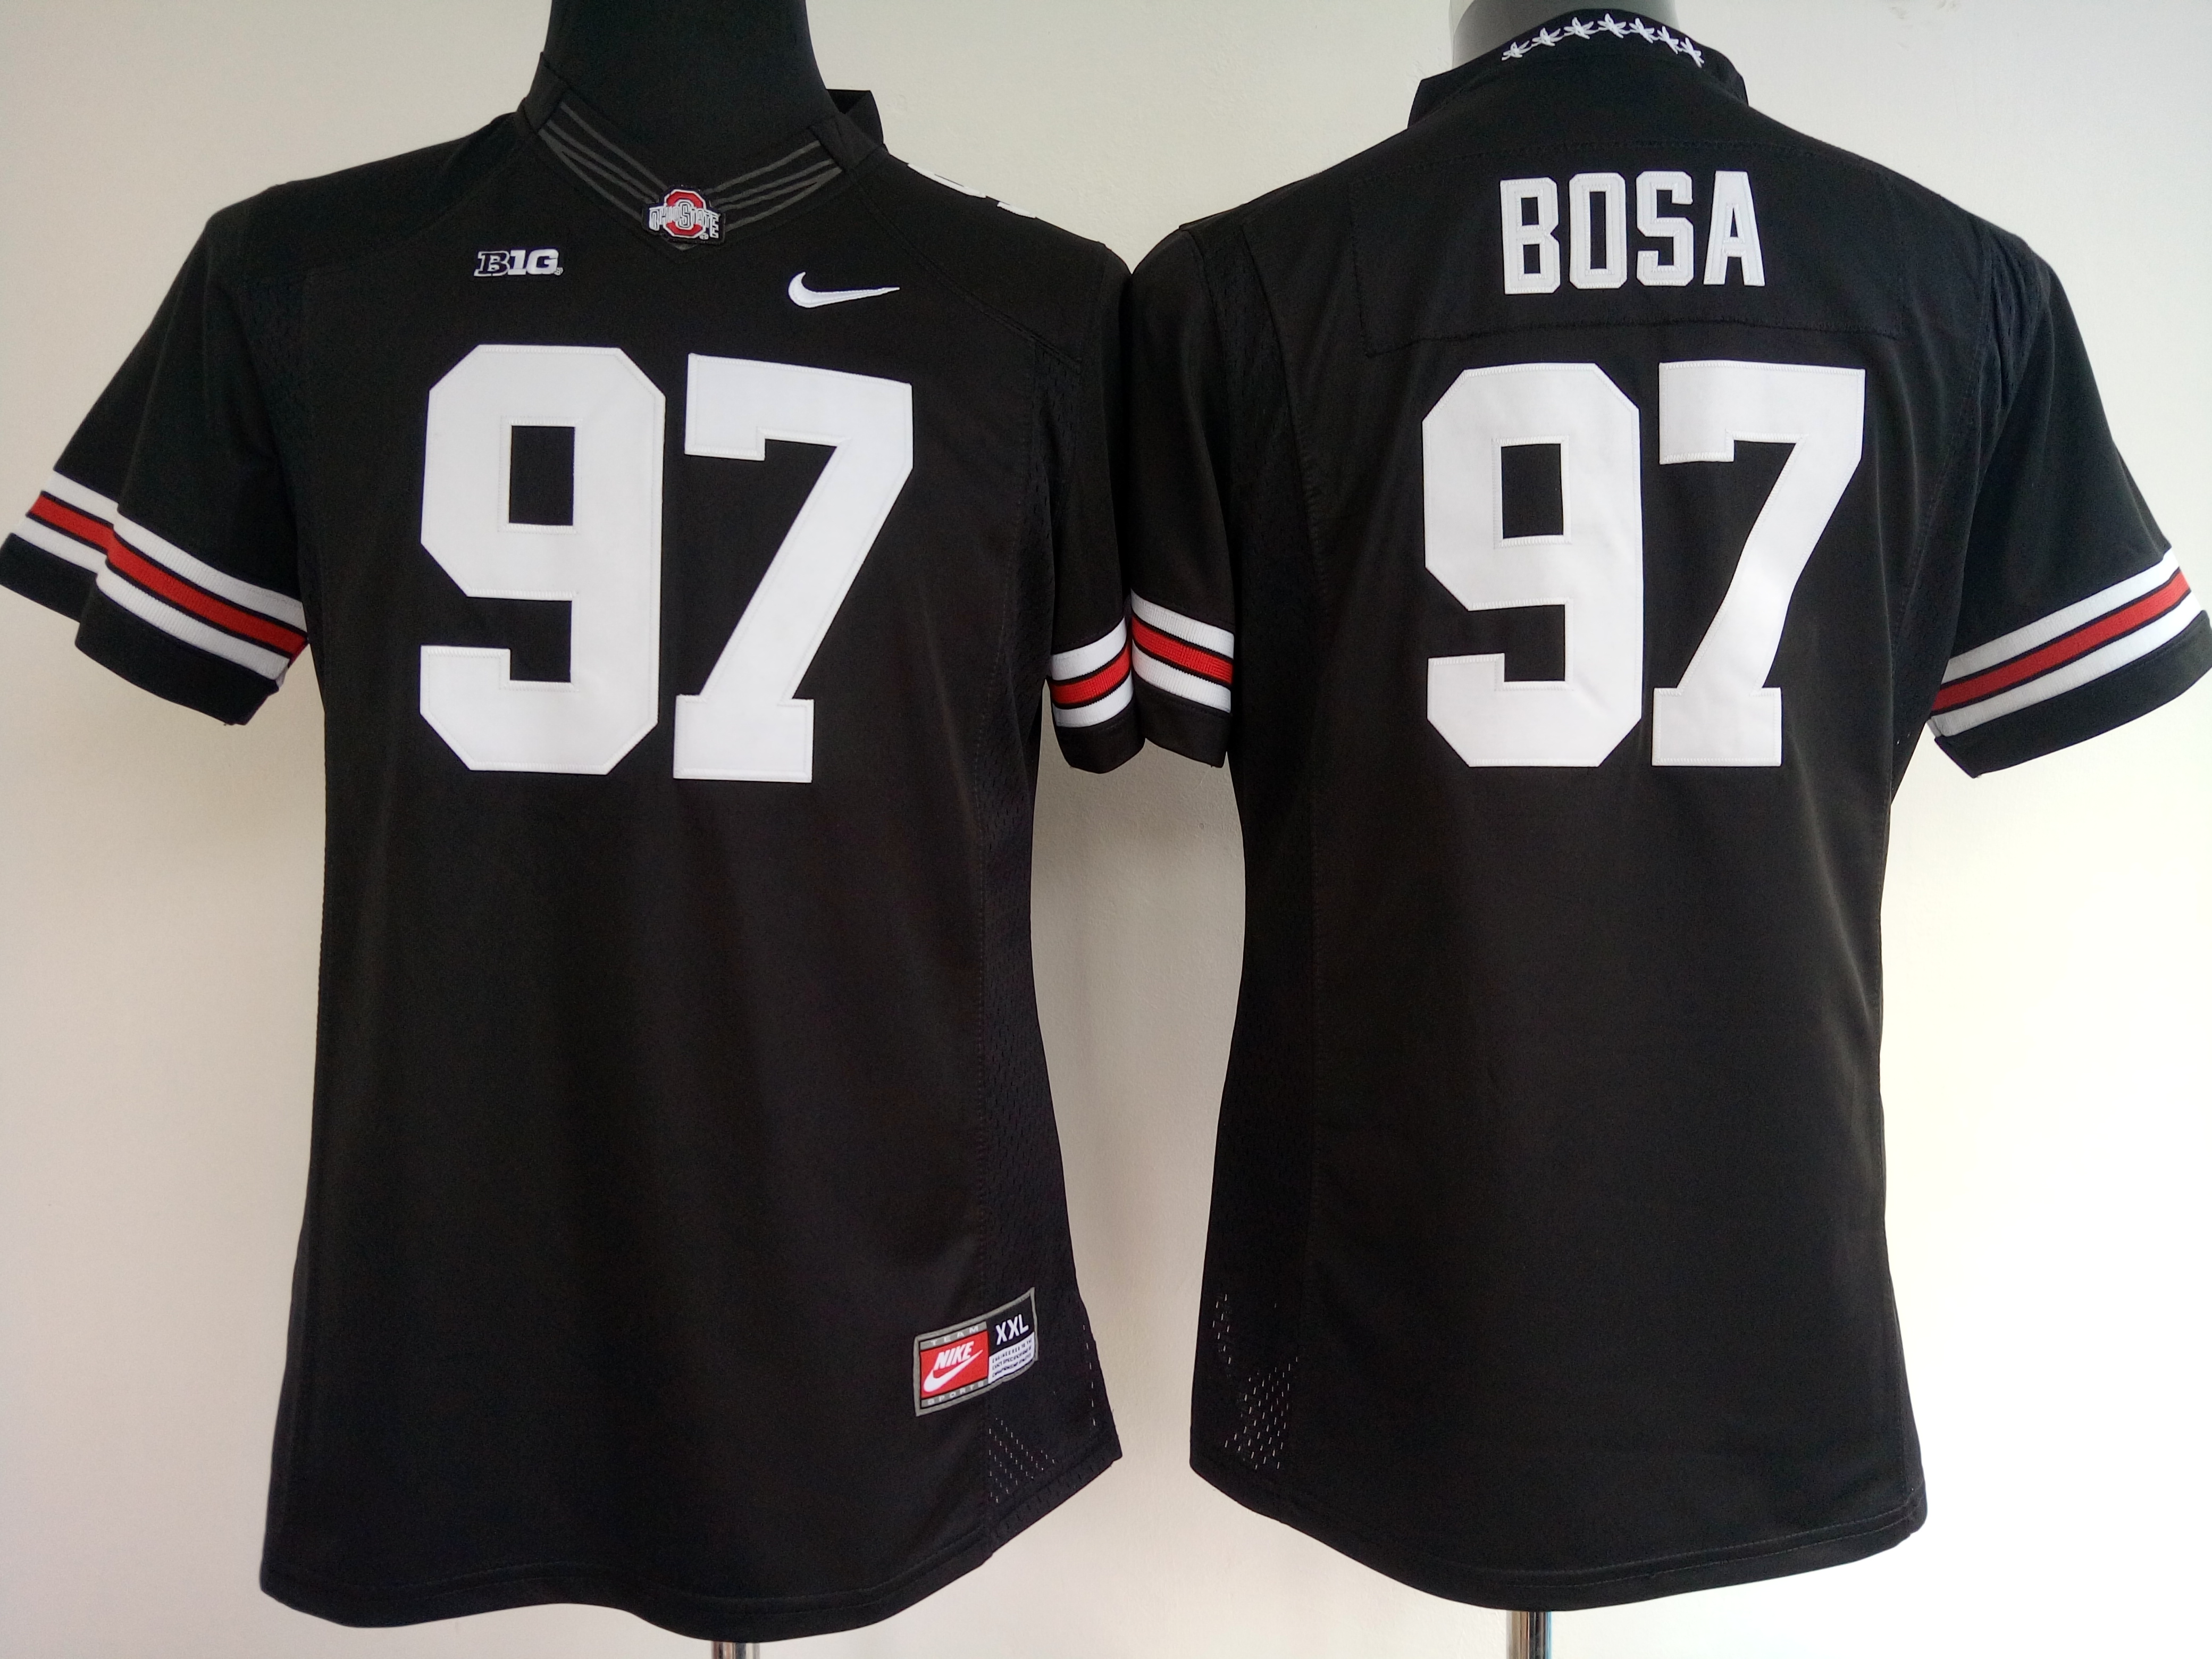 NCAA Womens Ohio State Buckeyes Black 97 Bosa jerseys